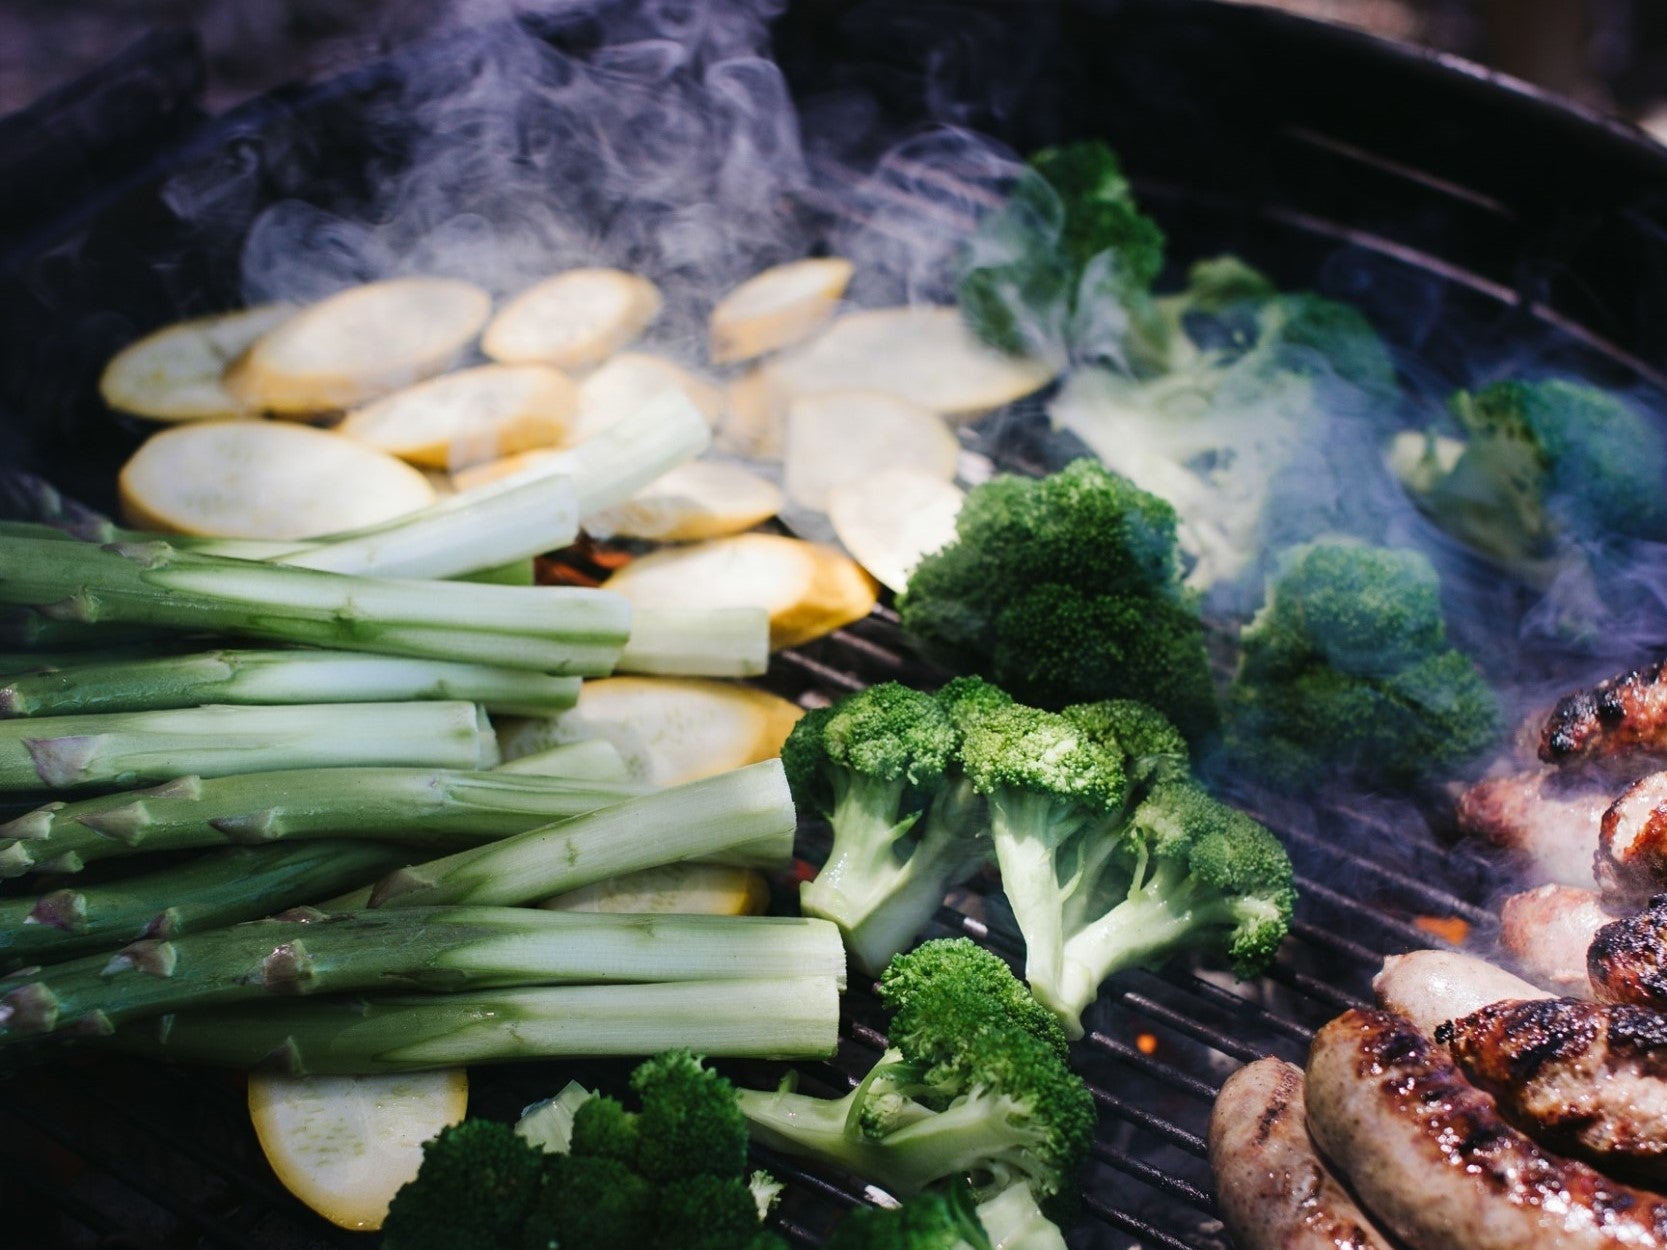 Healthy Grilling Organic Asparagus Yellow Summer Squash Bratwurst On The BBQ